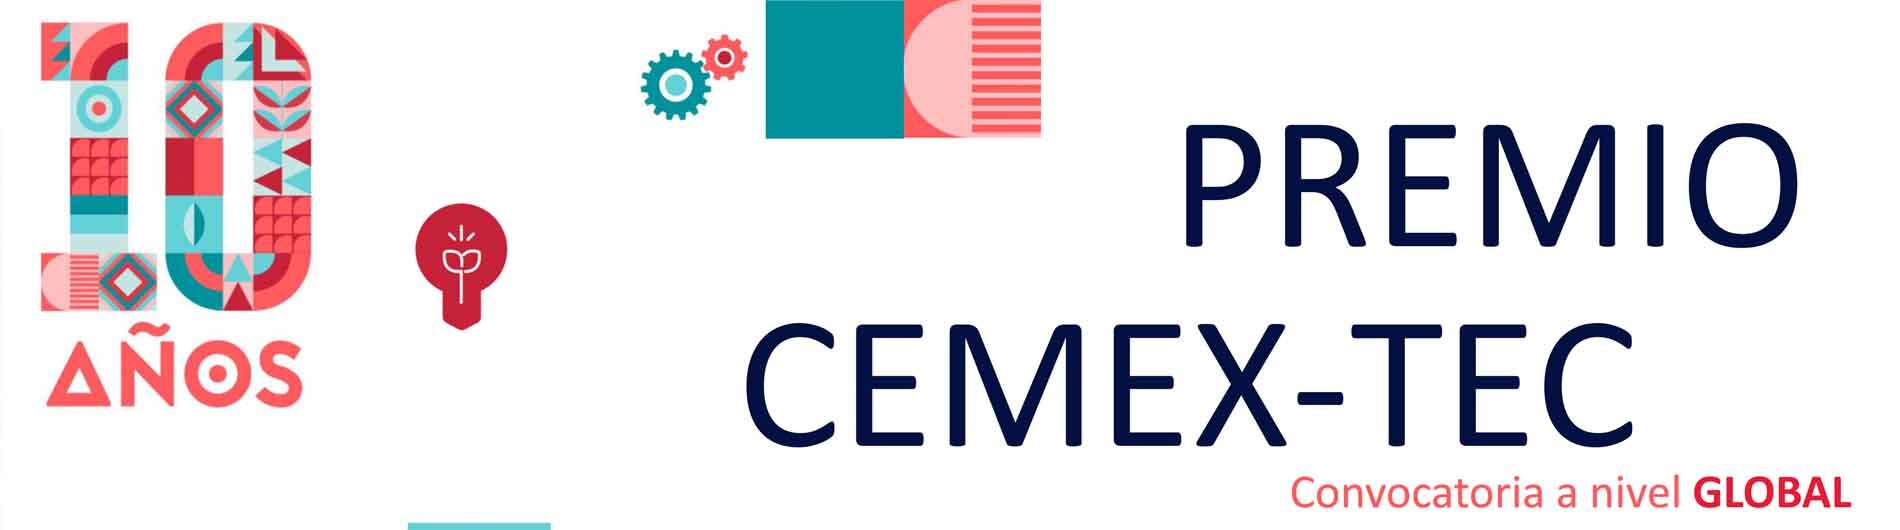 CEMEX-Tec 2020